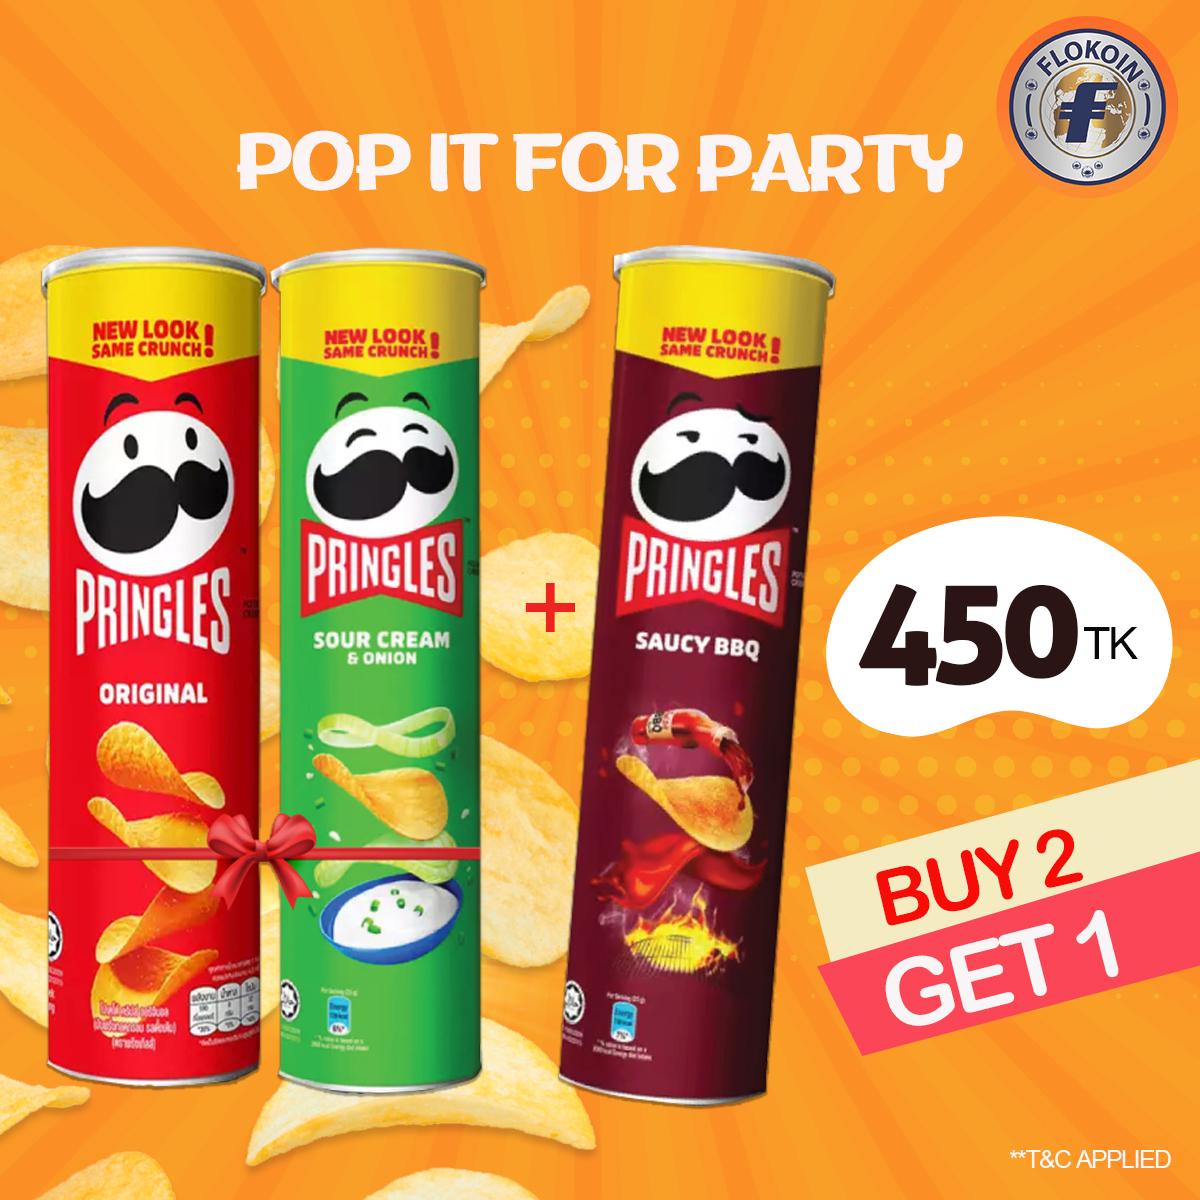 Pringles Potato Chips 147gm Buy 2 Get 1 Free Offer: Original, Sour Cream & Onion, Saucy BBQ Flavors